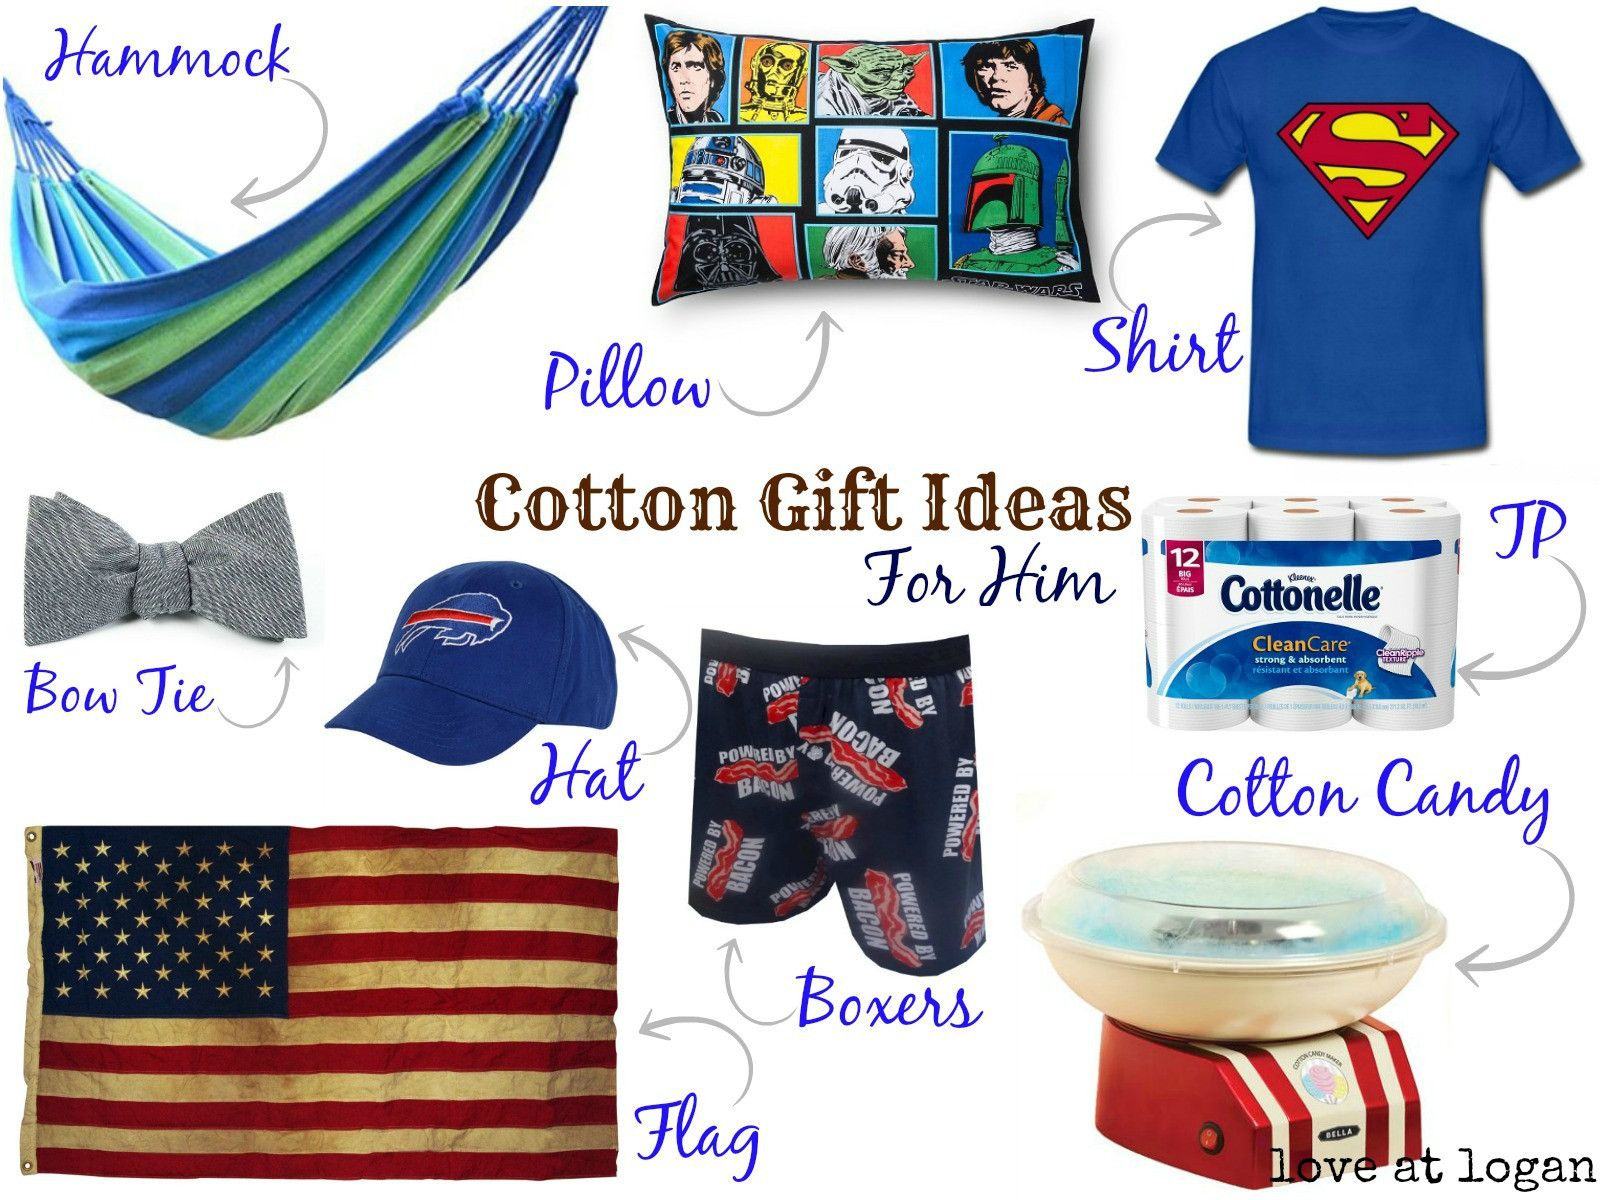 Second Anniversary Gift Ideas
 Love at Logan Second Anniversary Cotton Gift Ideas